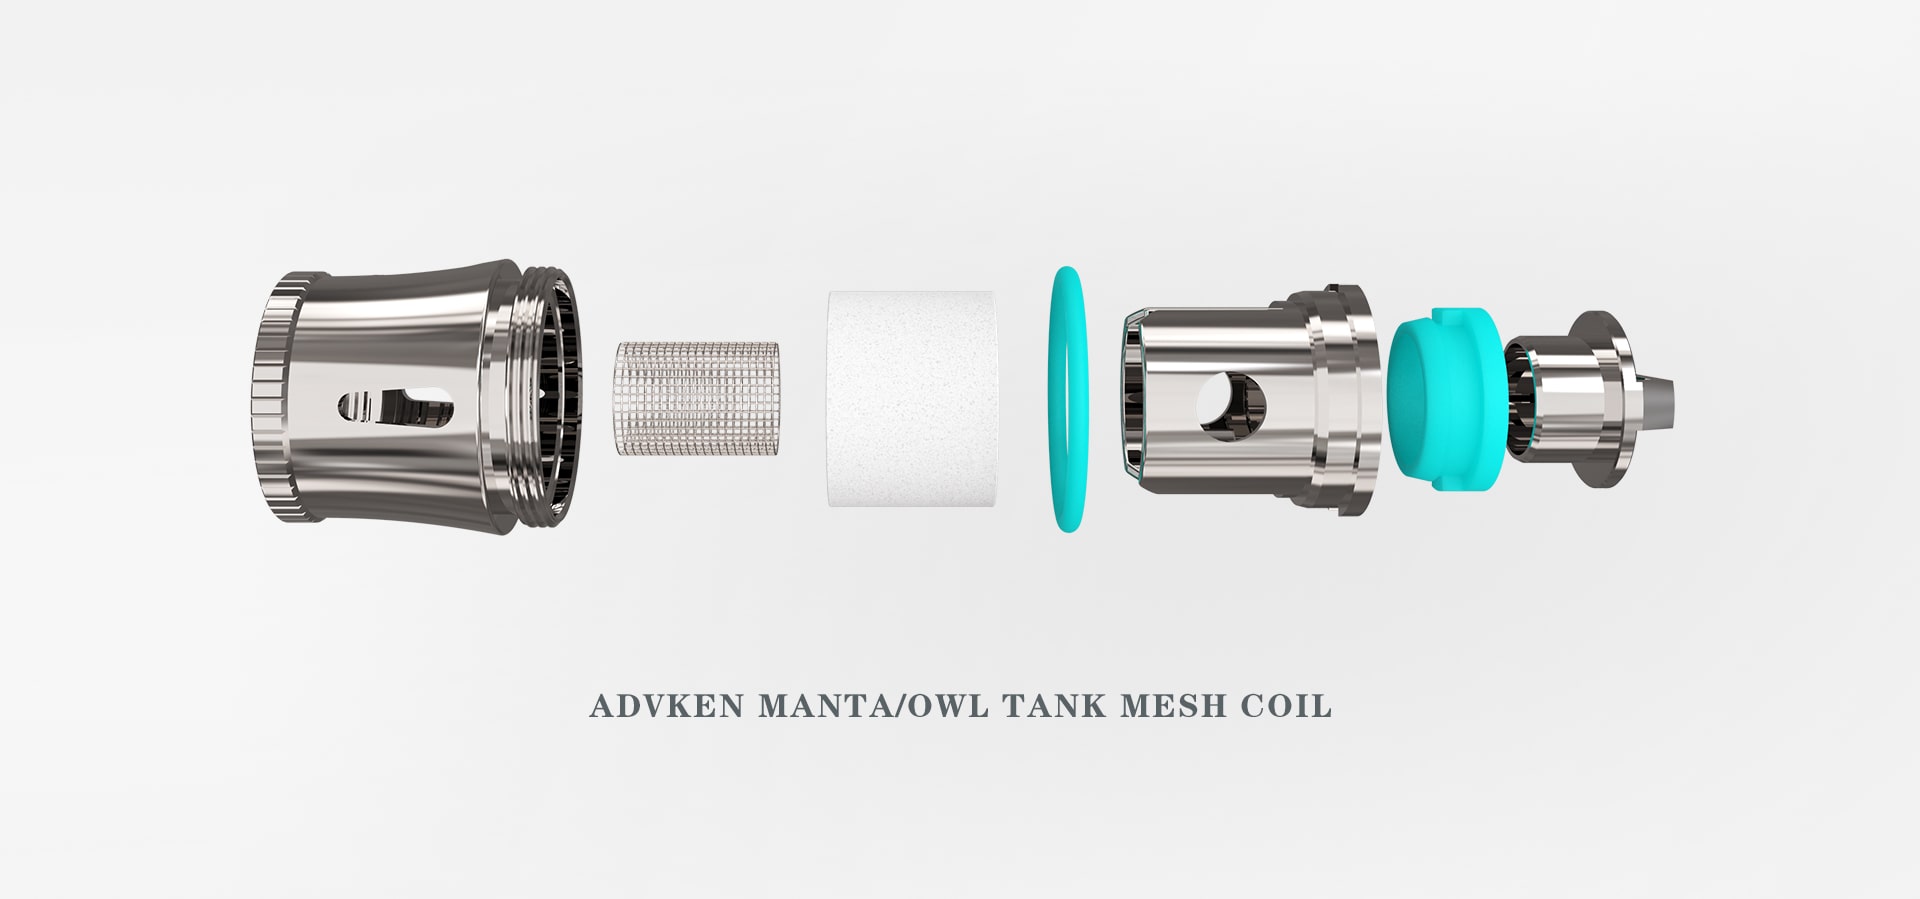 Advken Owl/Manta Tank Mesh Coil Components